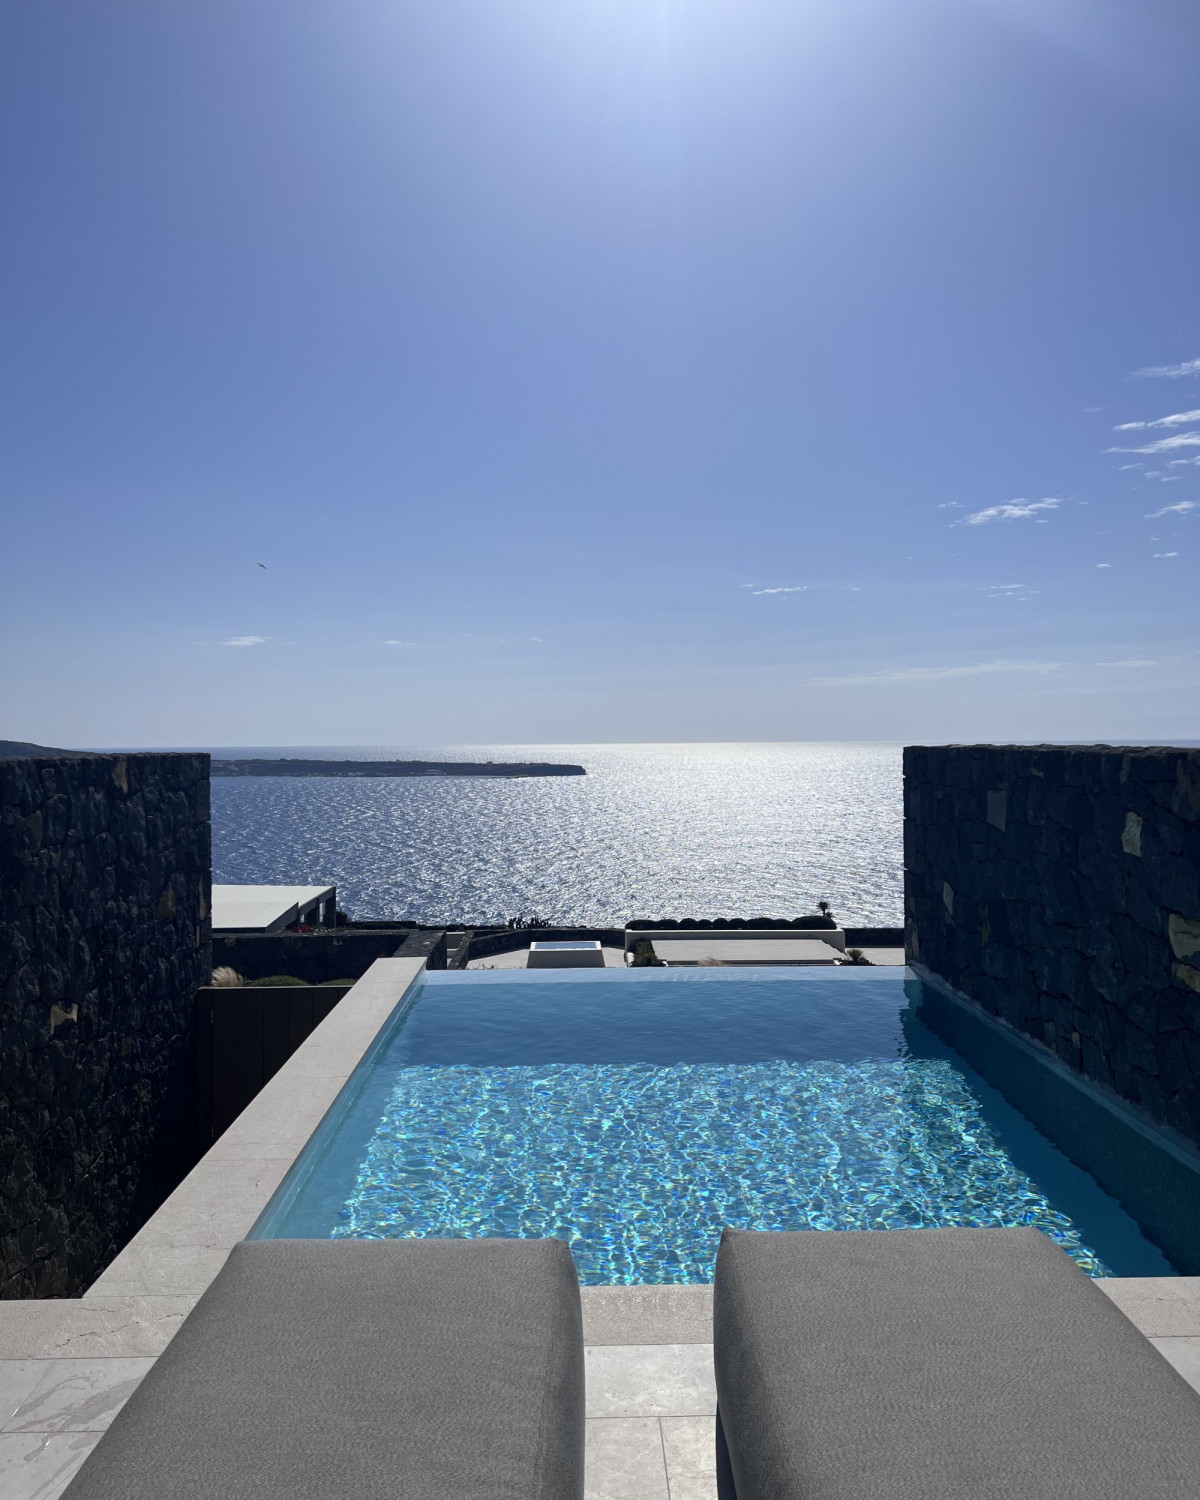 square infinity pool overlooking the ocean